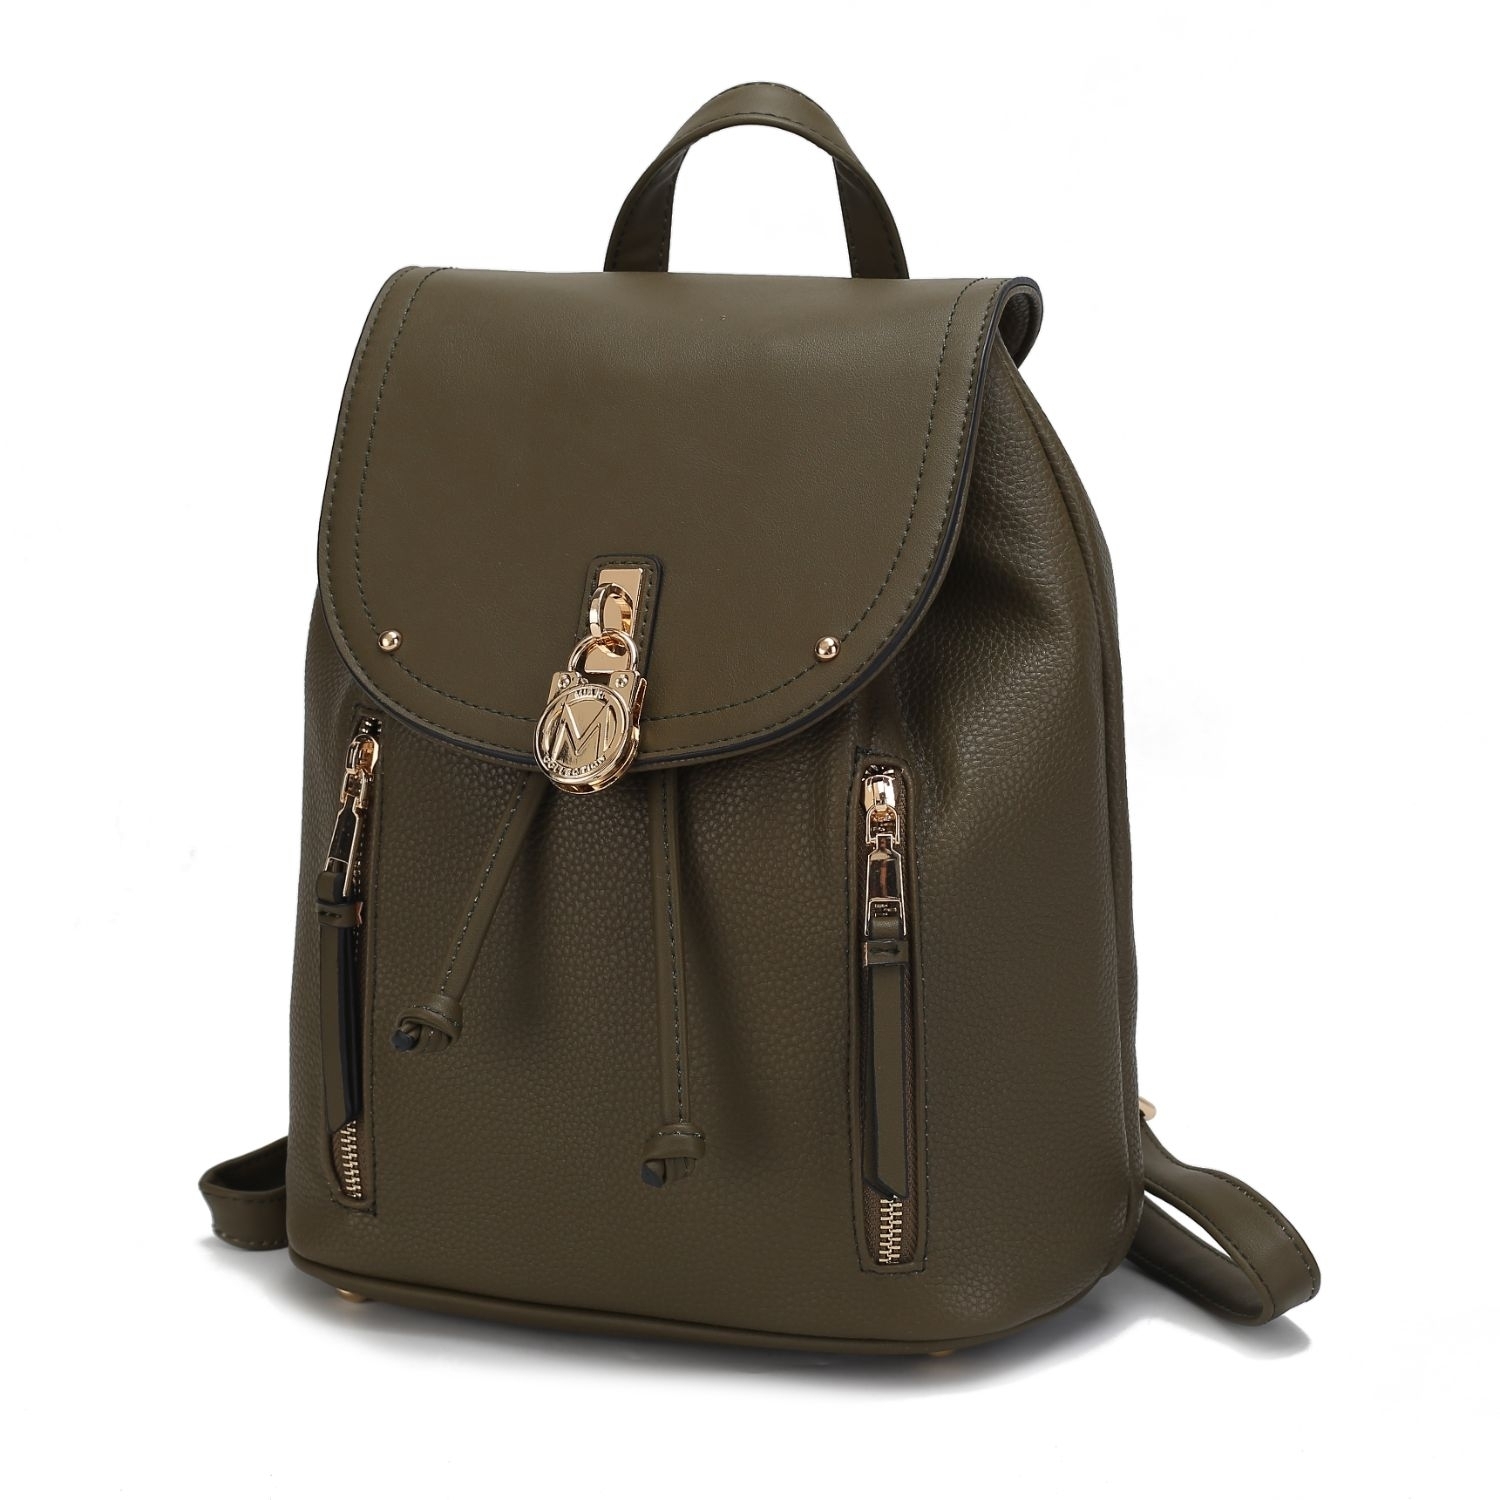 MKF Collection Xandria Vegan Leather Women's Backpack Handbag By Mia K - Olive